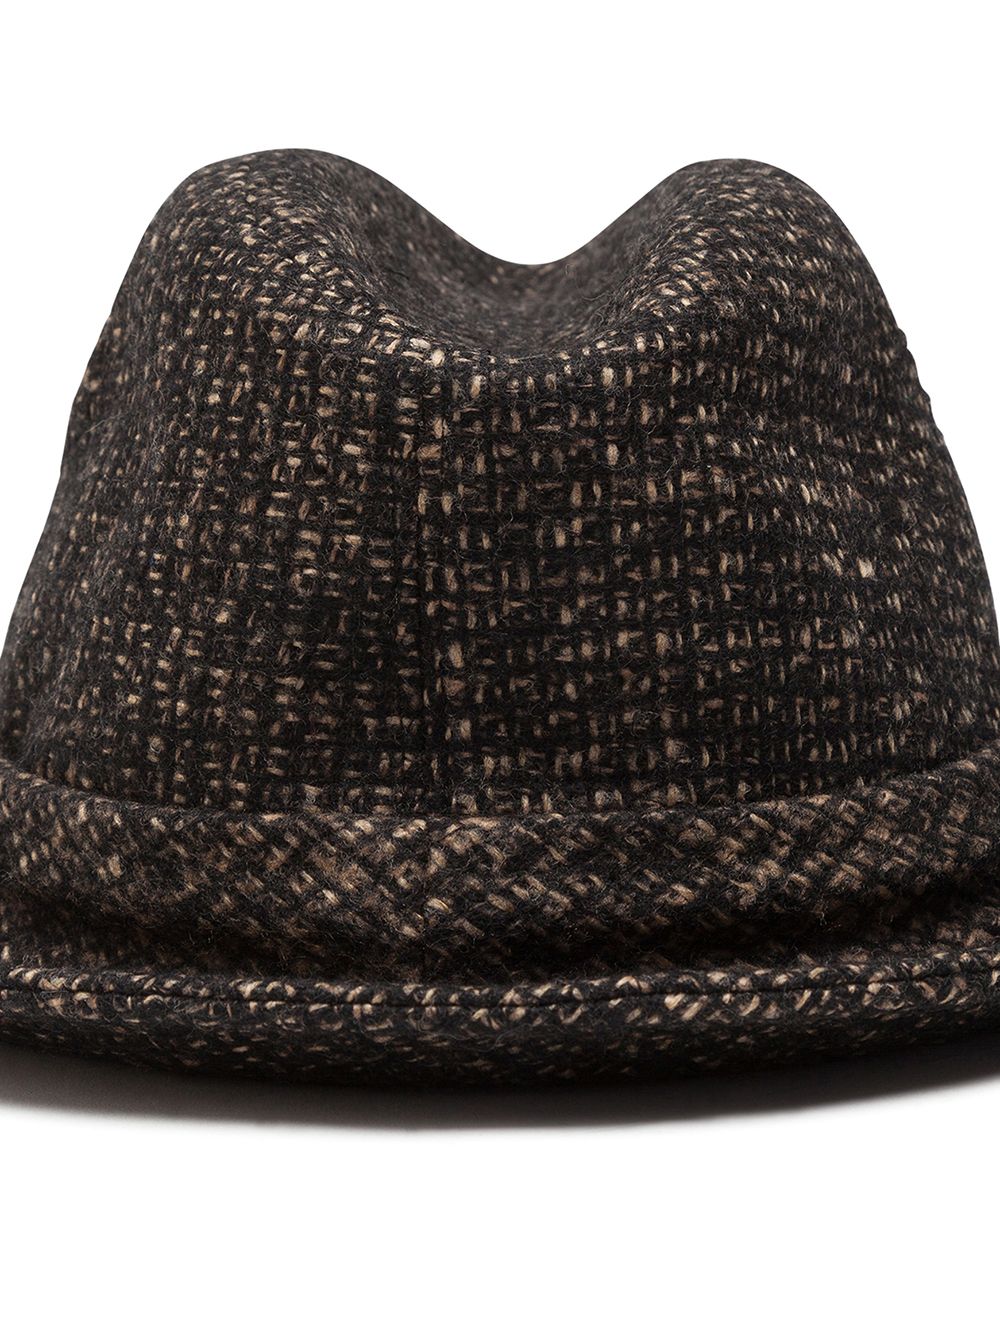 фото Dolce & gabbana твидовая шляпа-федора